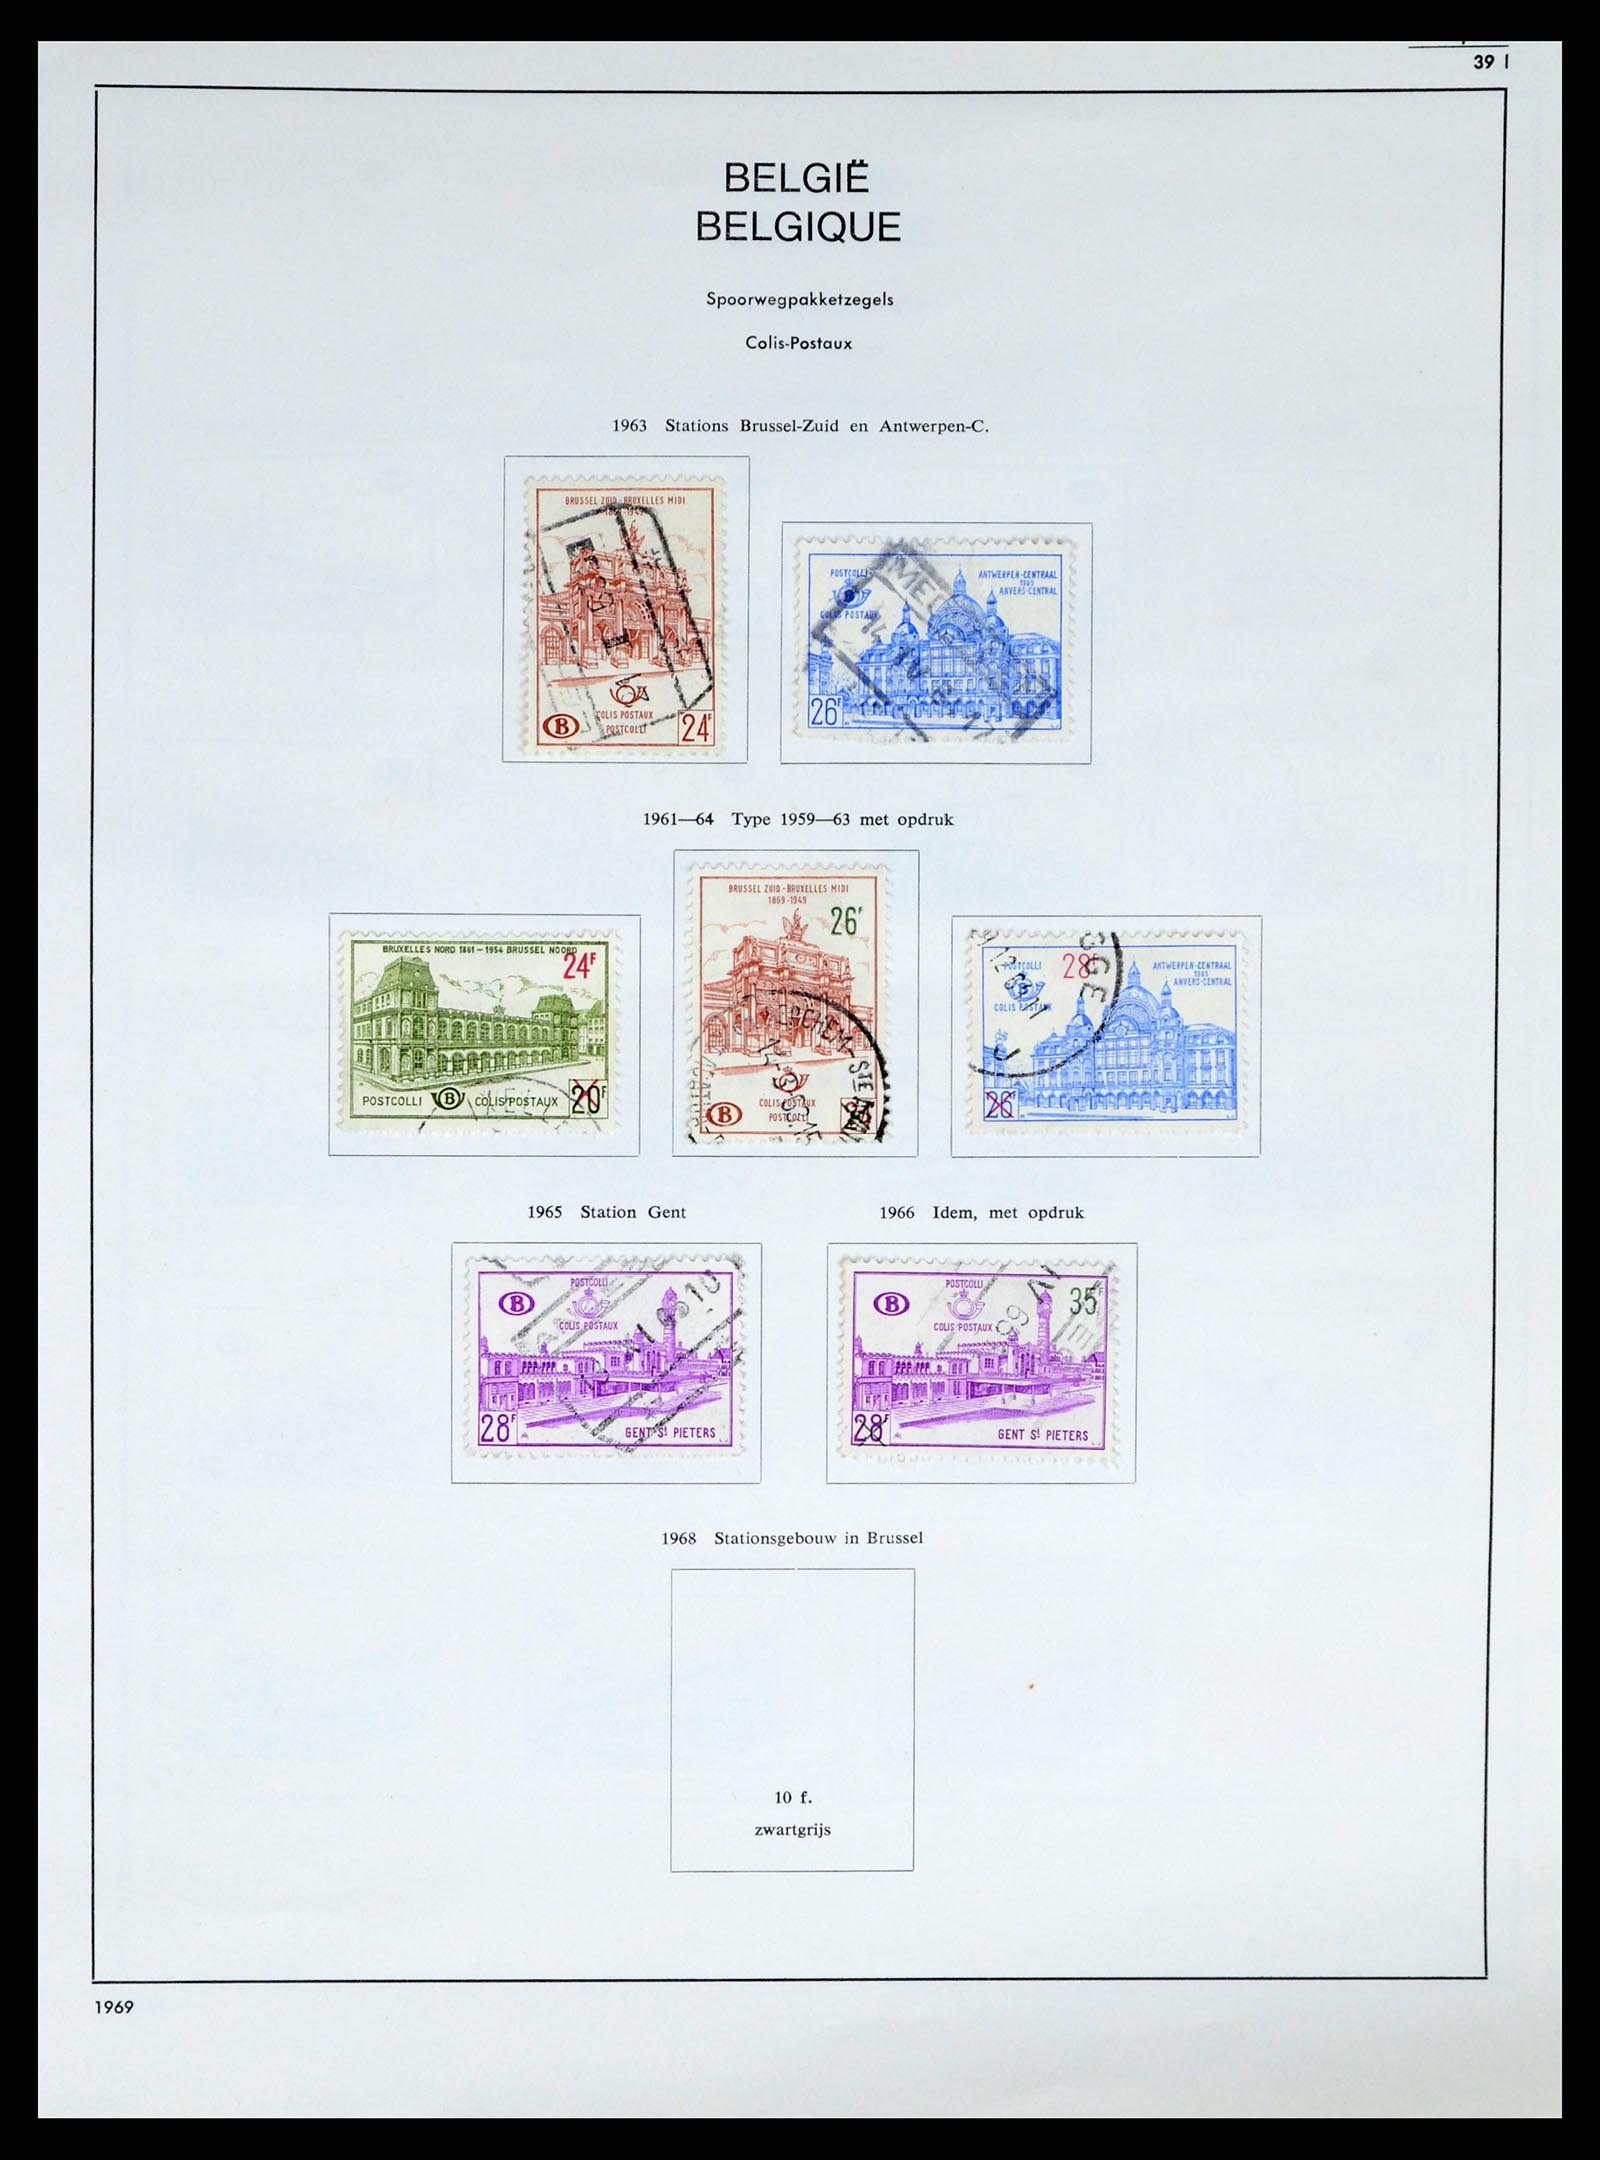 37959 154 - Stamp Collection 37959 Belgium and Belgian Congo 1849-1960.